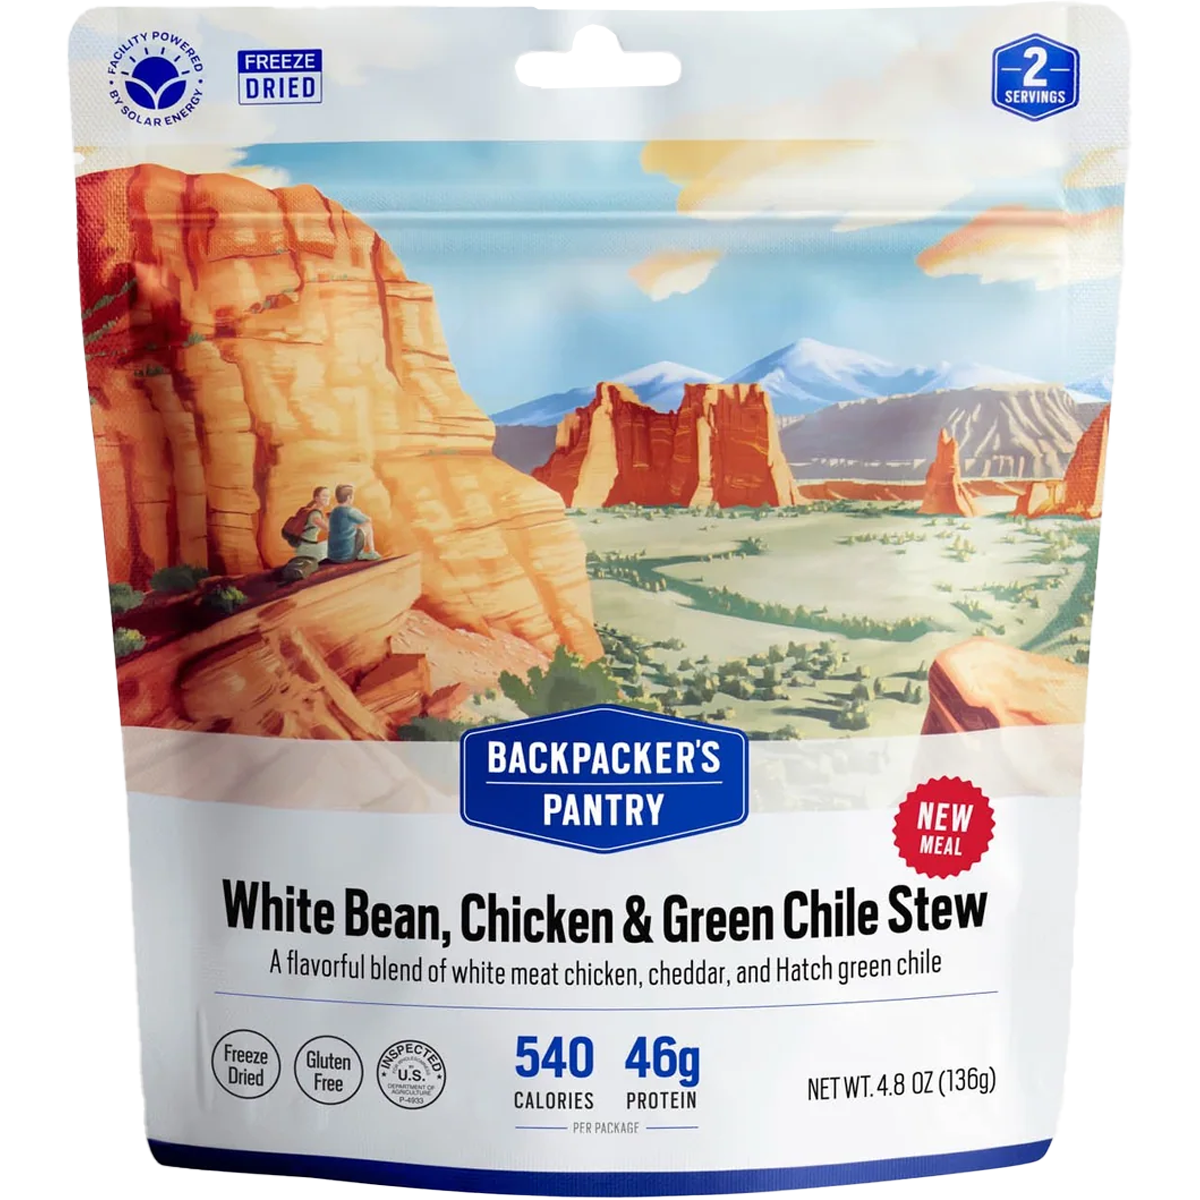 White Bean Chicken & Green Chile Stew (2 Servings) alternate view